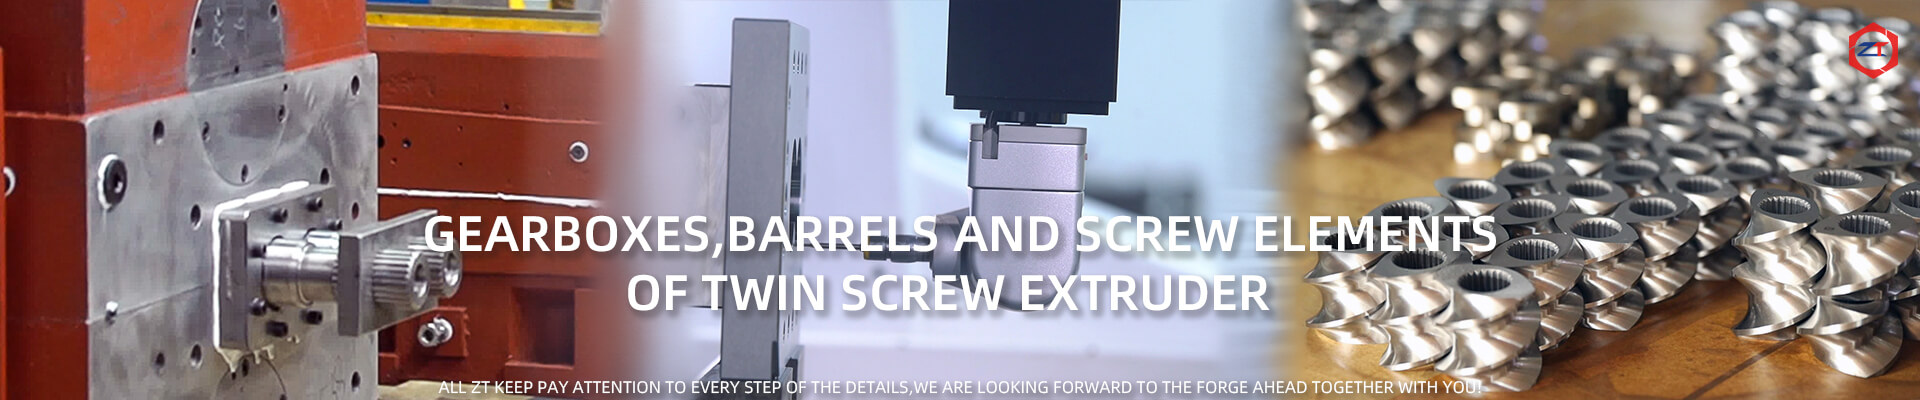 twin screw extruder parts